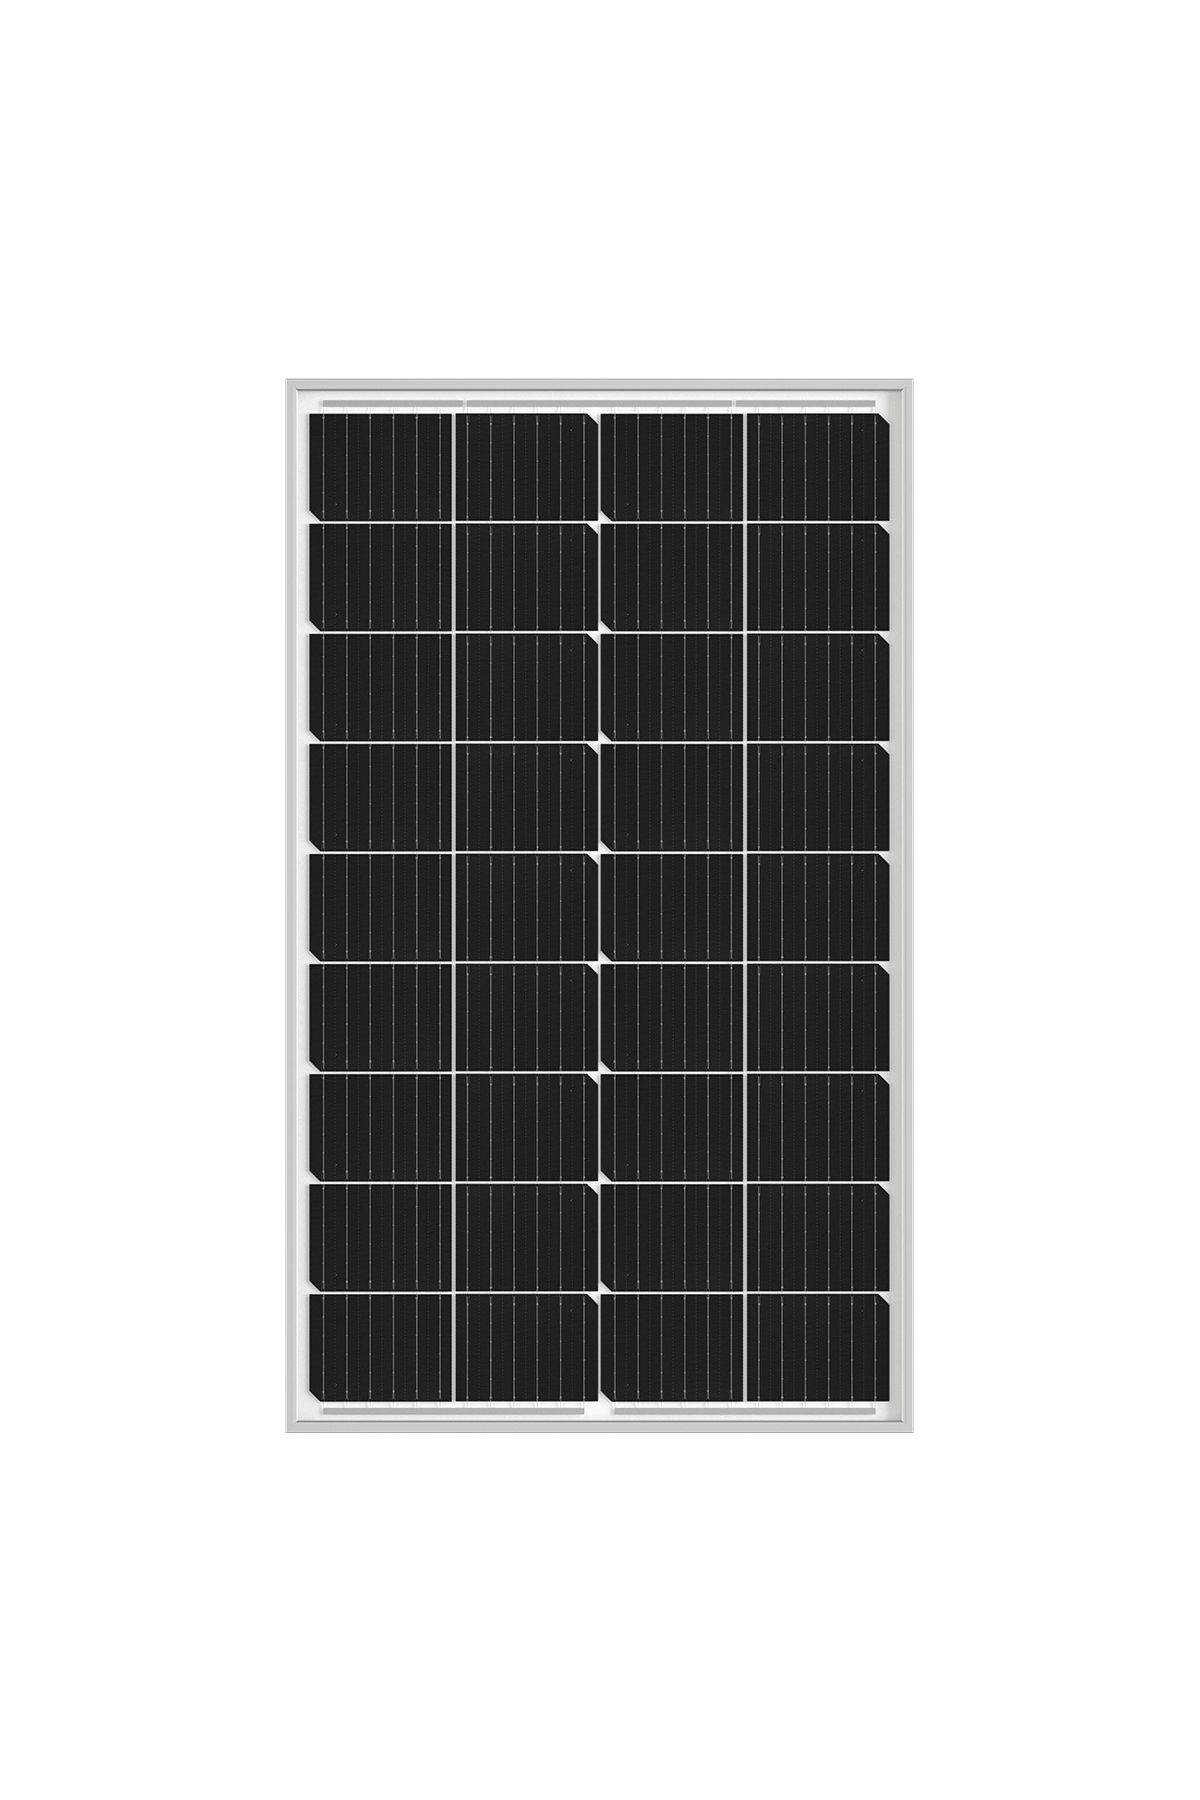 TommaTech 75 W Watt 36pm M6 Half Cut Multibusbar Güneş Paneli Solar Panel Monokristal